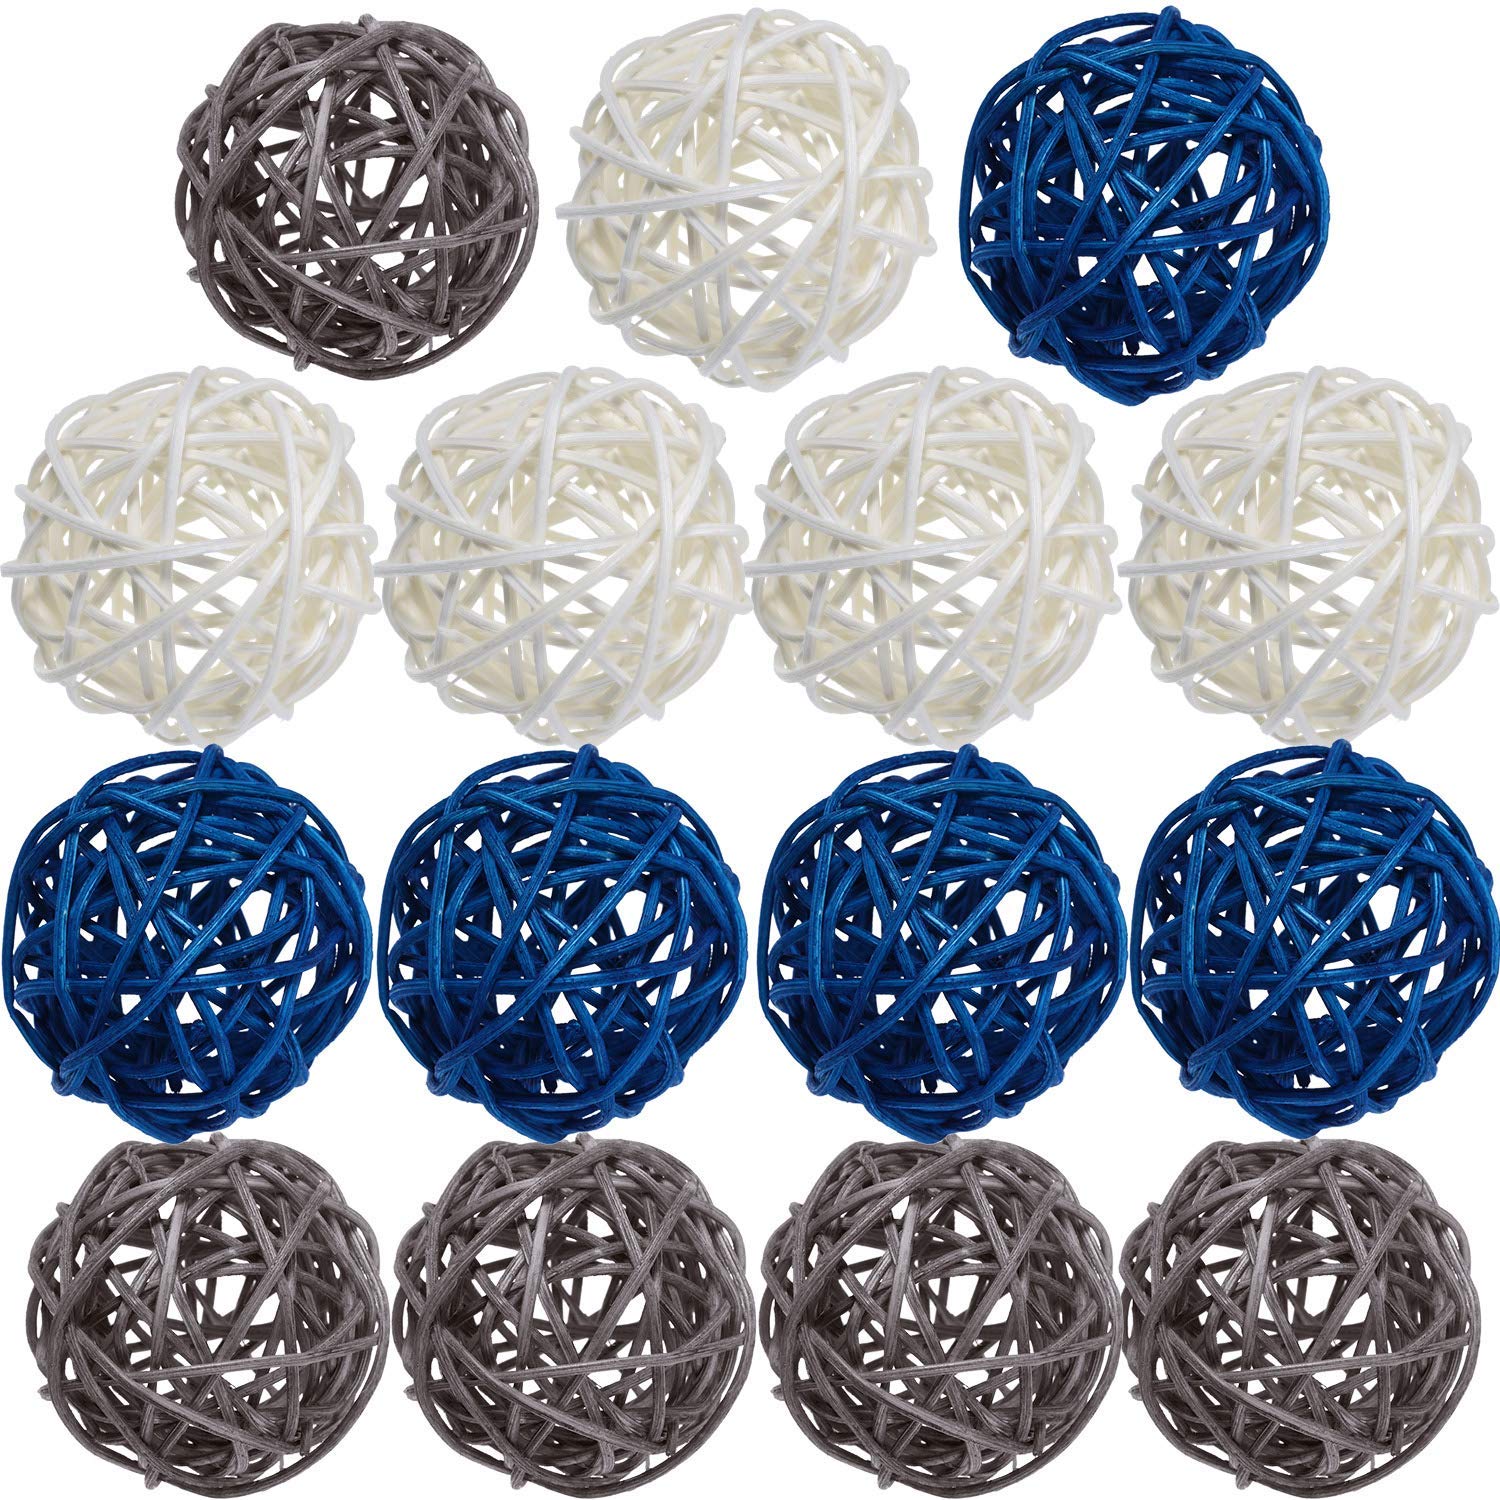 Yaomiao Wicker Decorative Balls, Set of 15